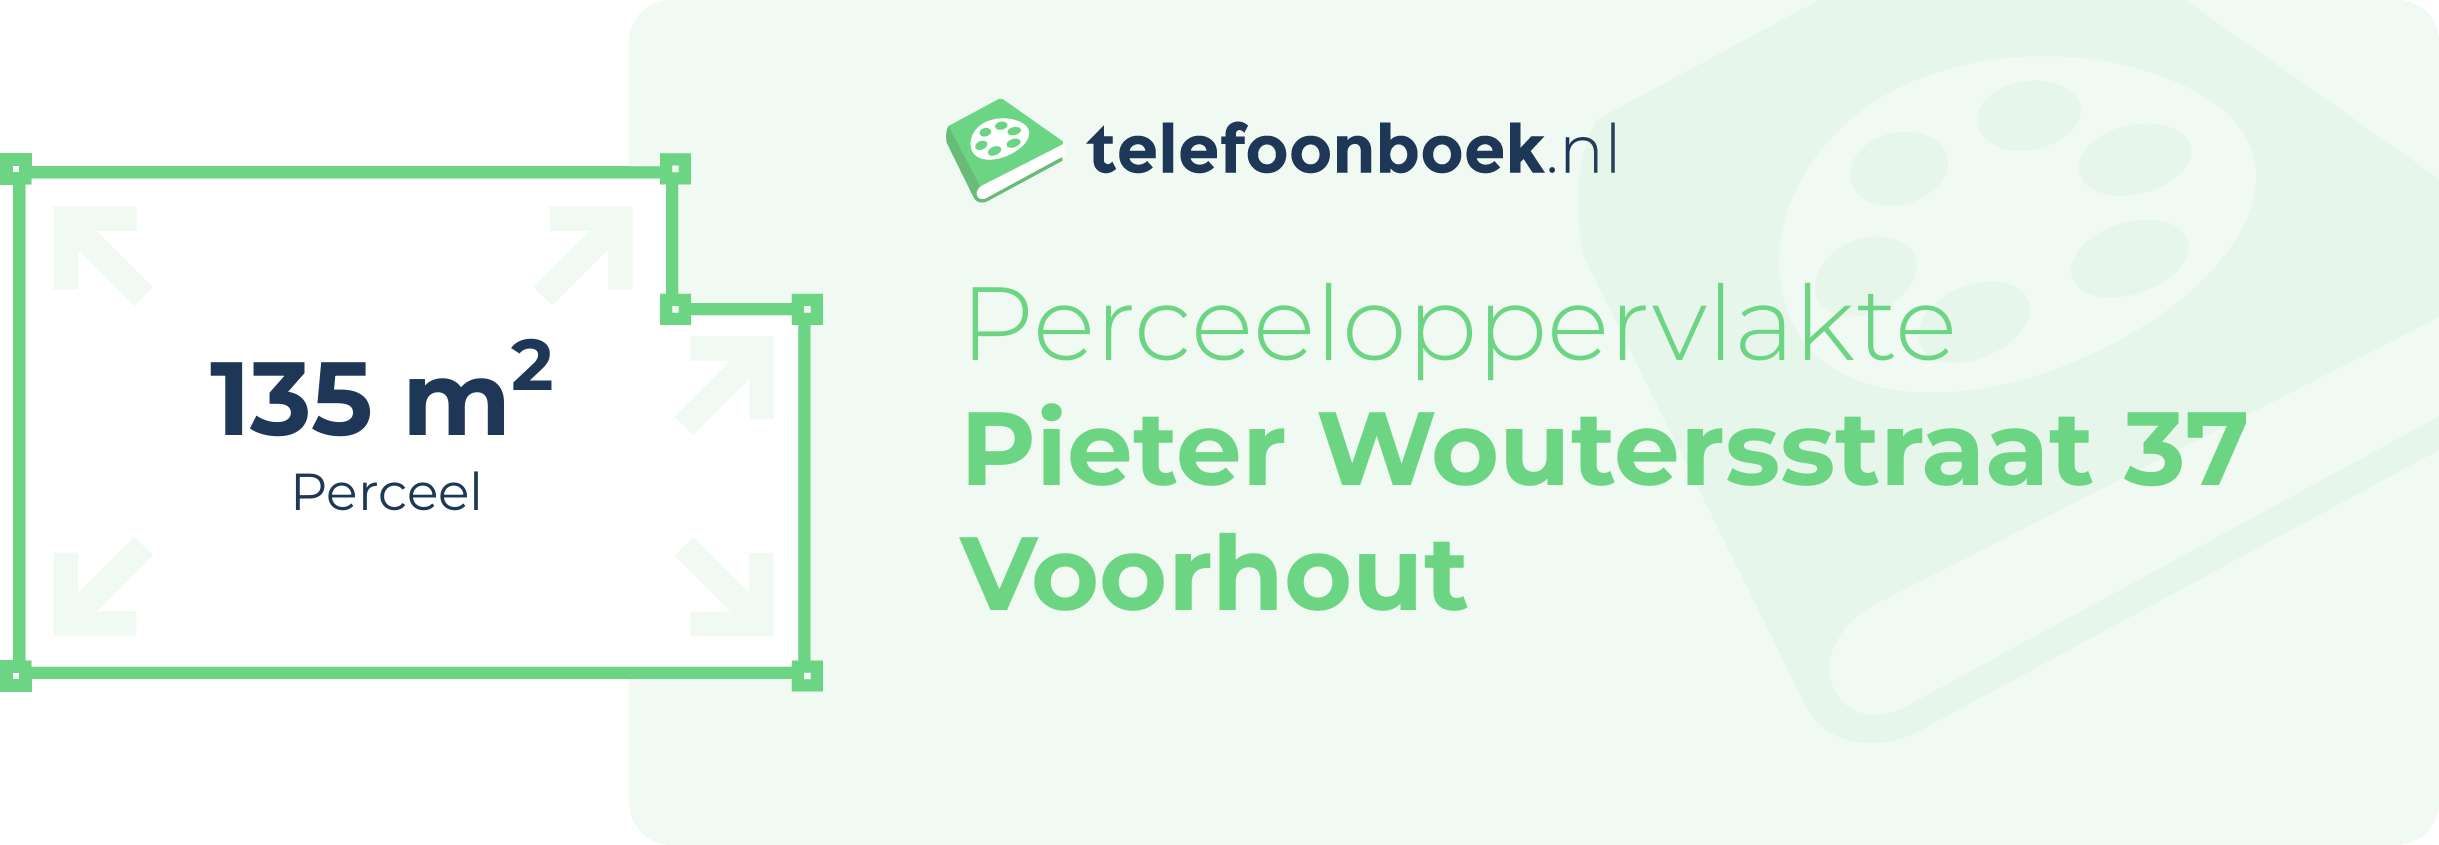 Perceeloppervlakte Pieter Woutersstraat 37 Voorhout